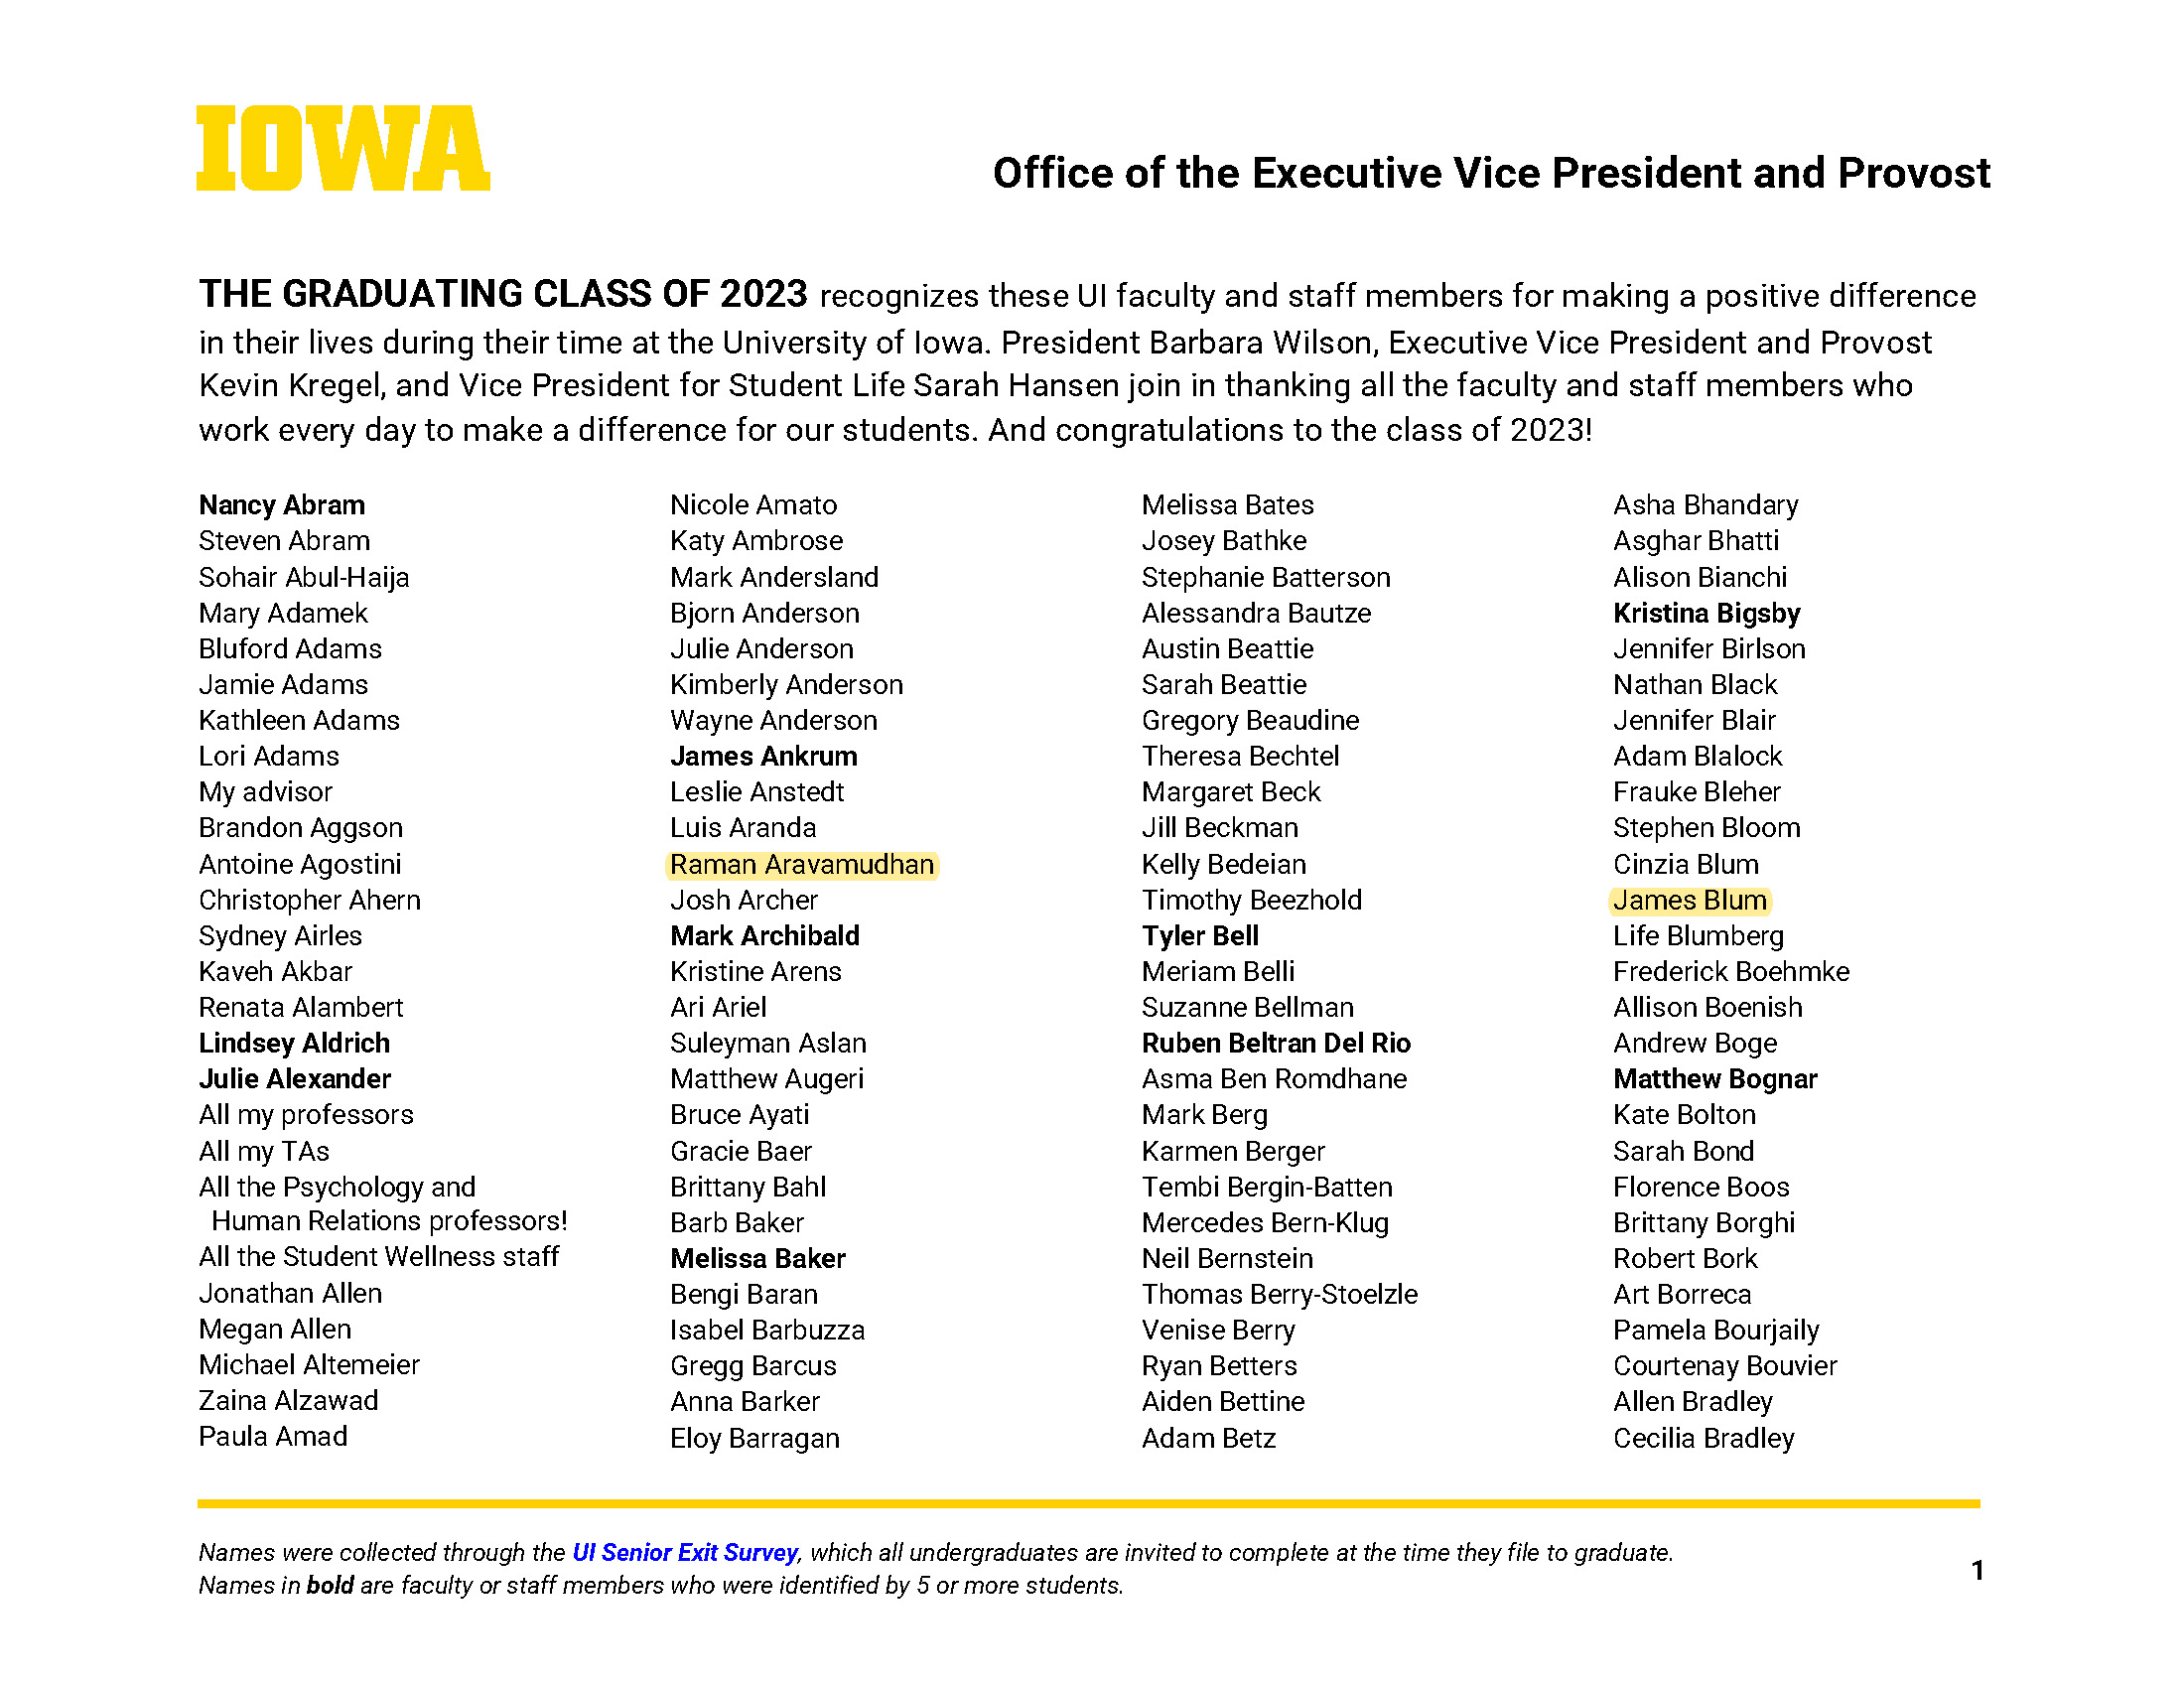 List of UIowaCS constituents recognized by graduating undergraduate students